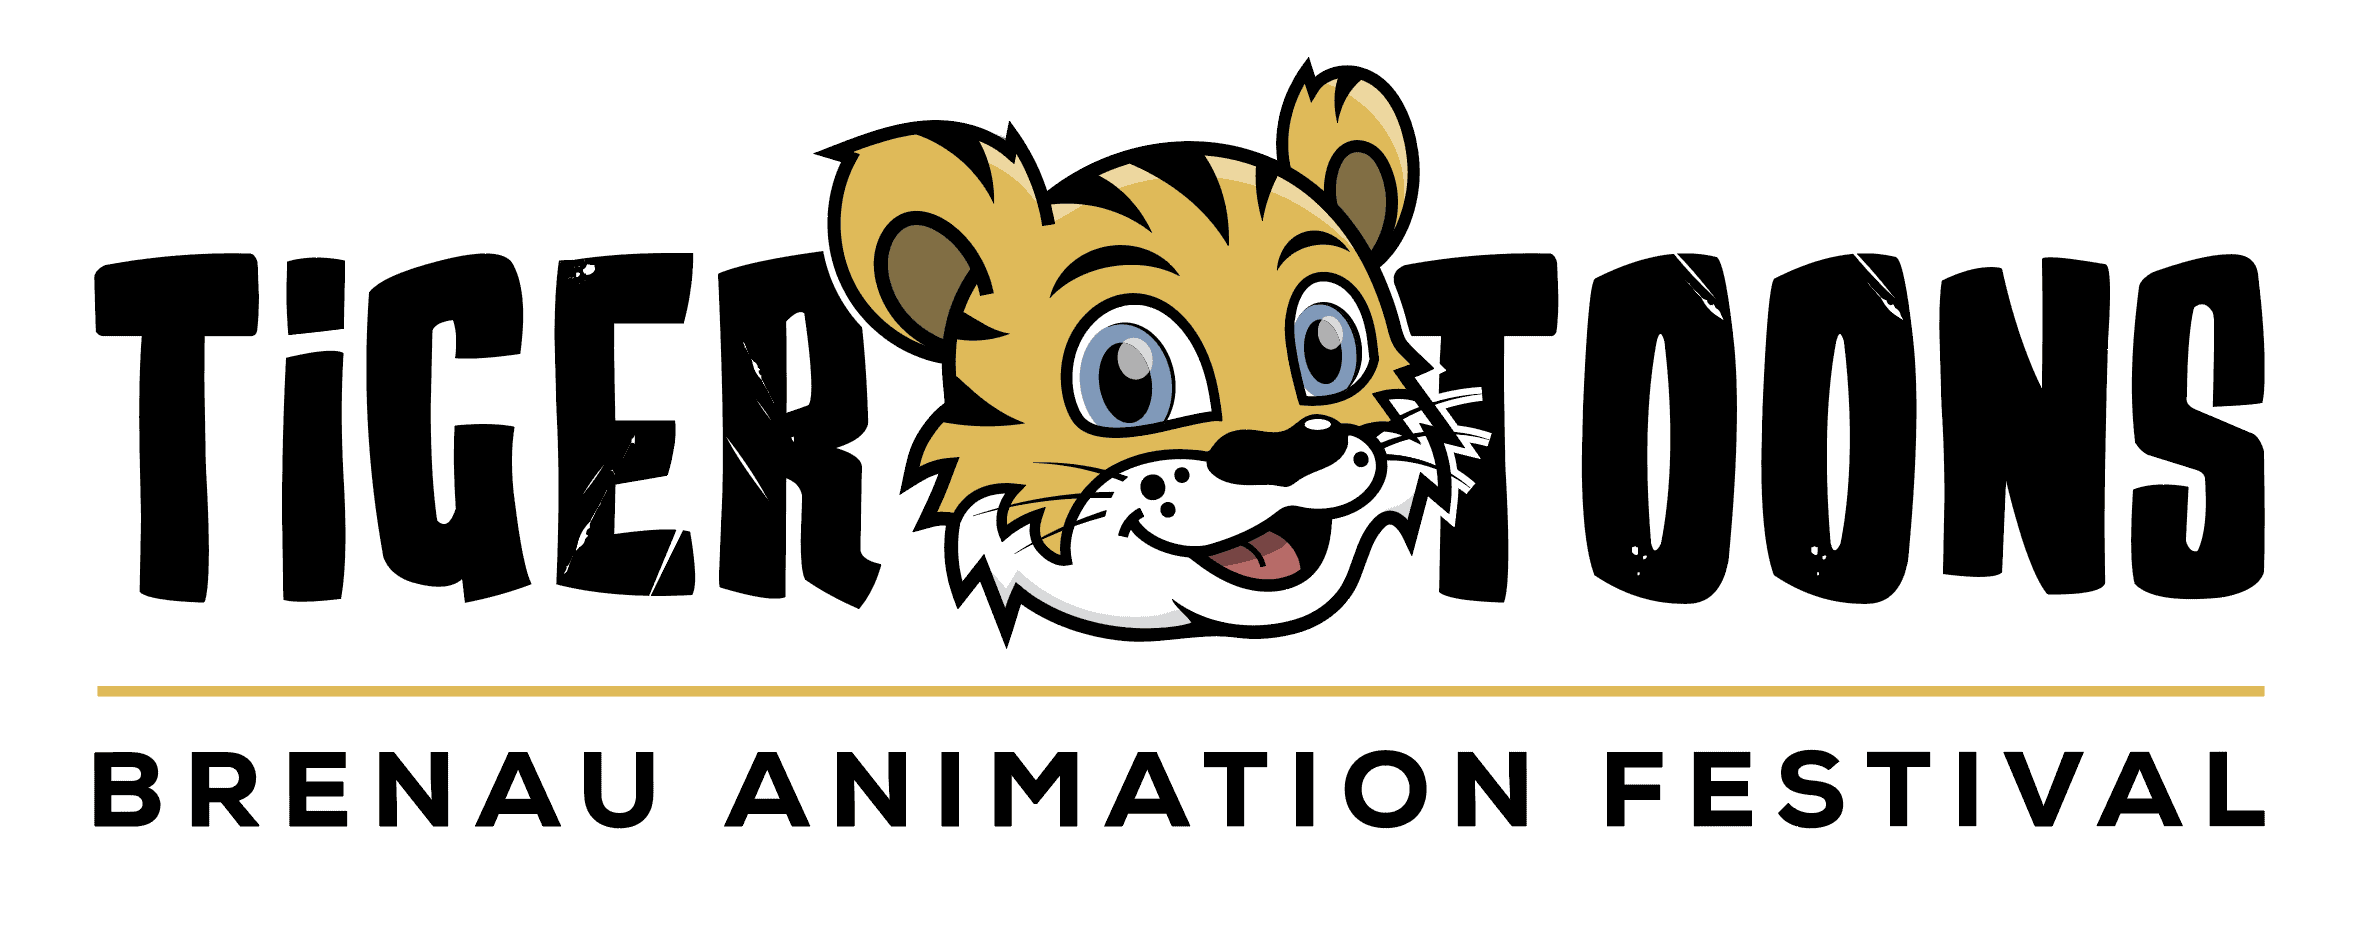 Tiger Toons animation festival